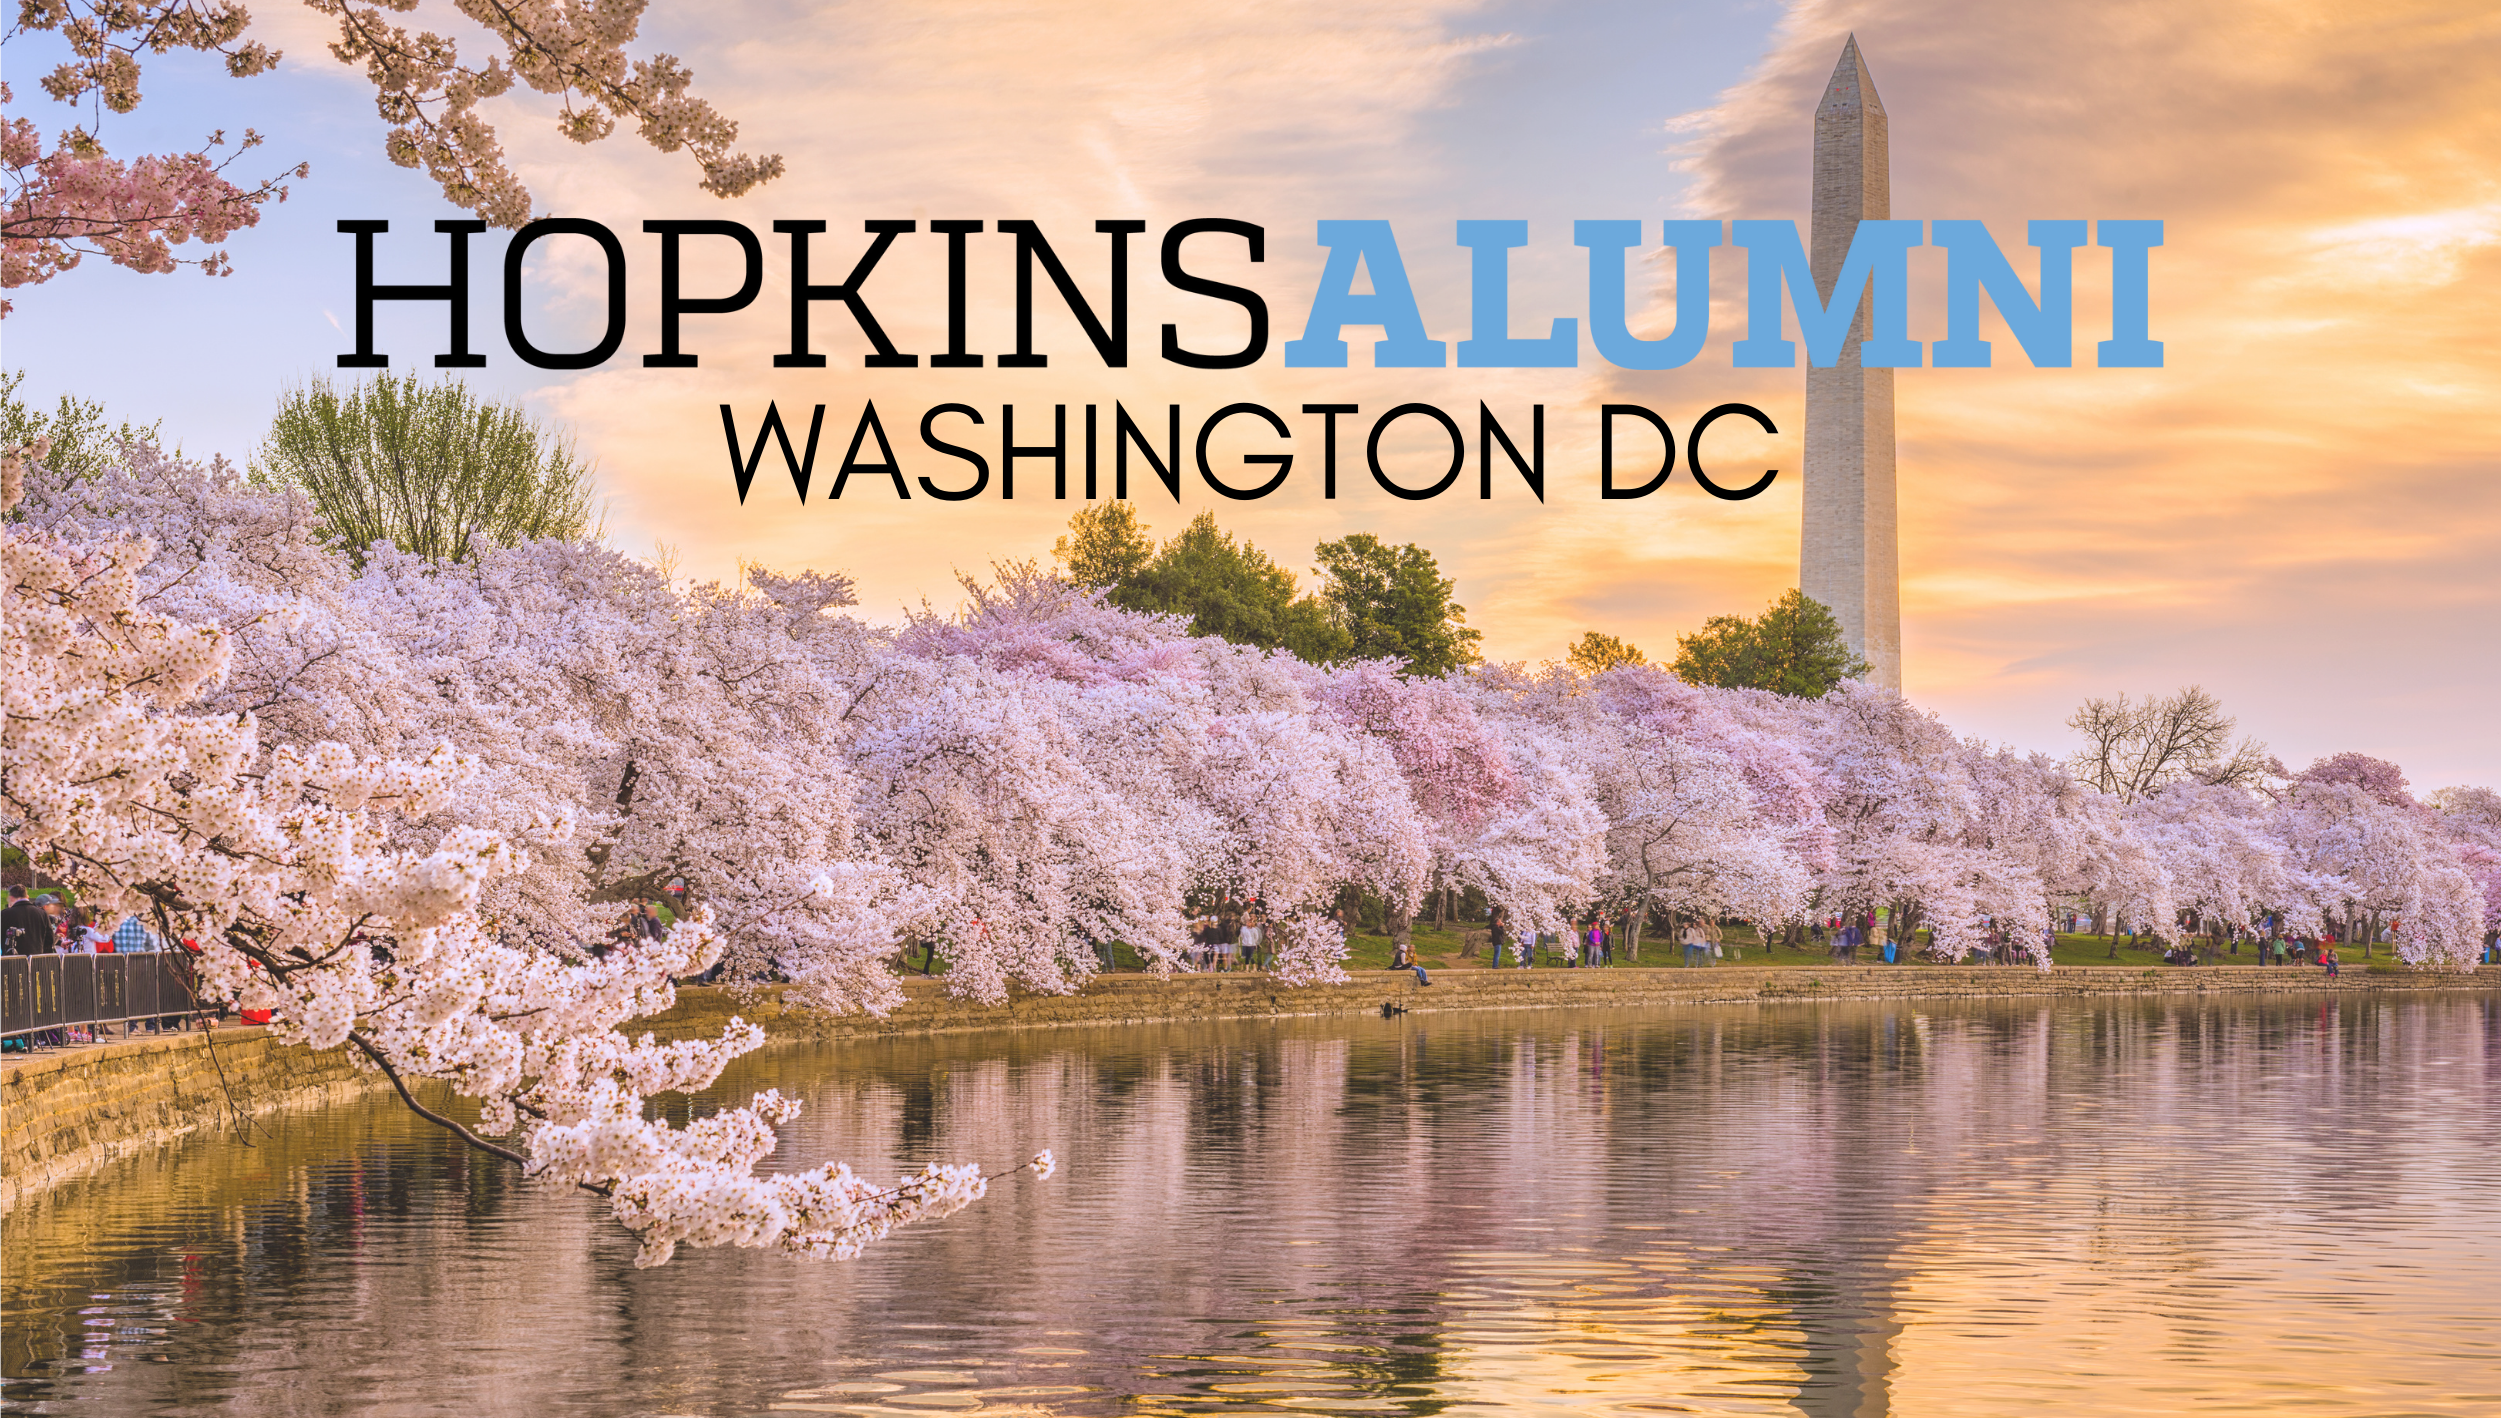 Washington DC Skyline with Hopkins Alumni Washington DC 